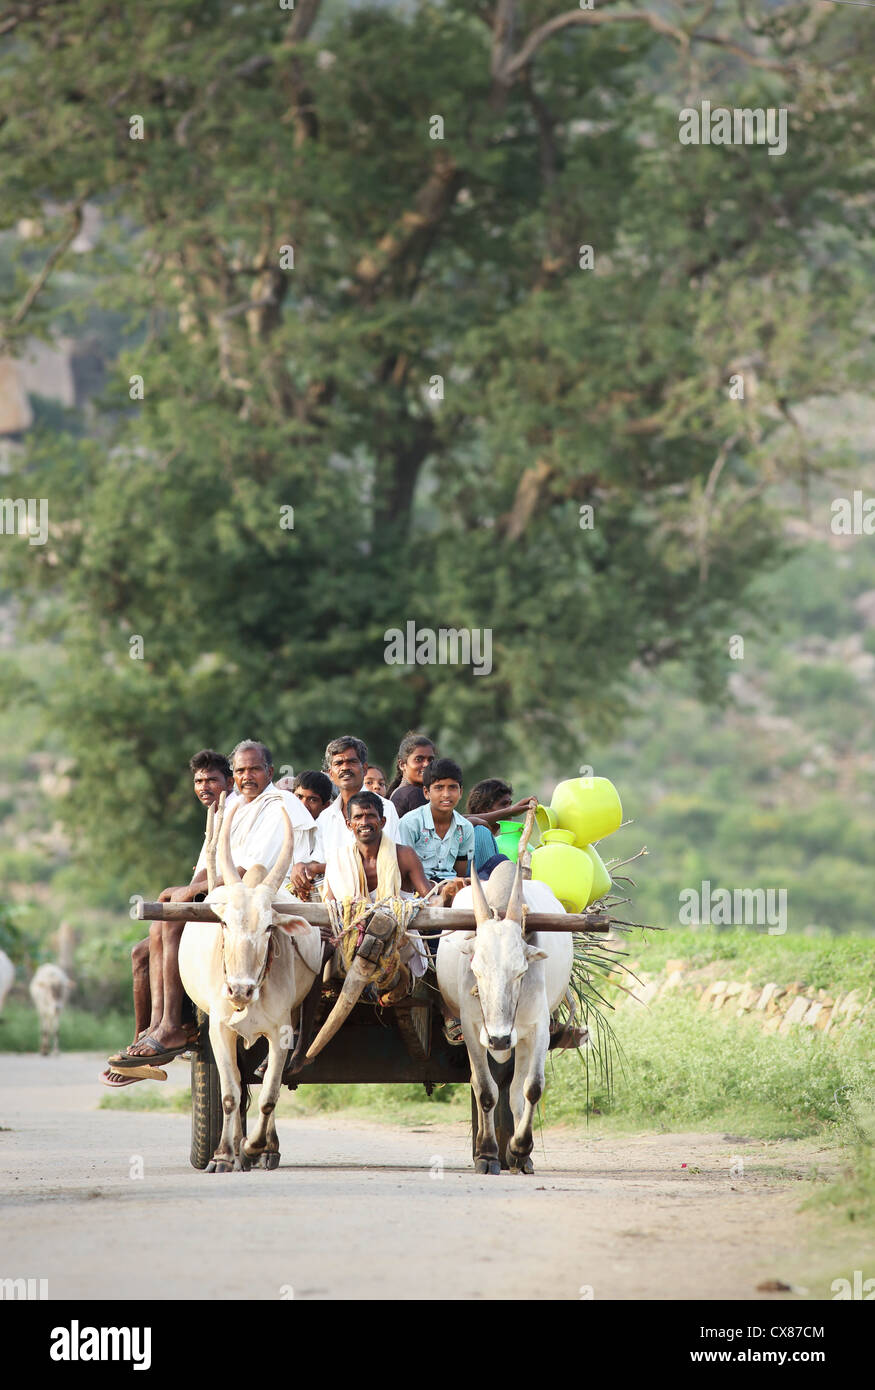 Bullock cart transporting villagers Andhra Pradesh South India Stock Photo